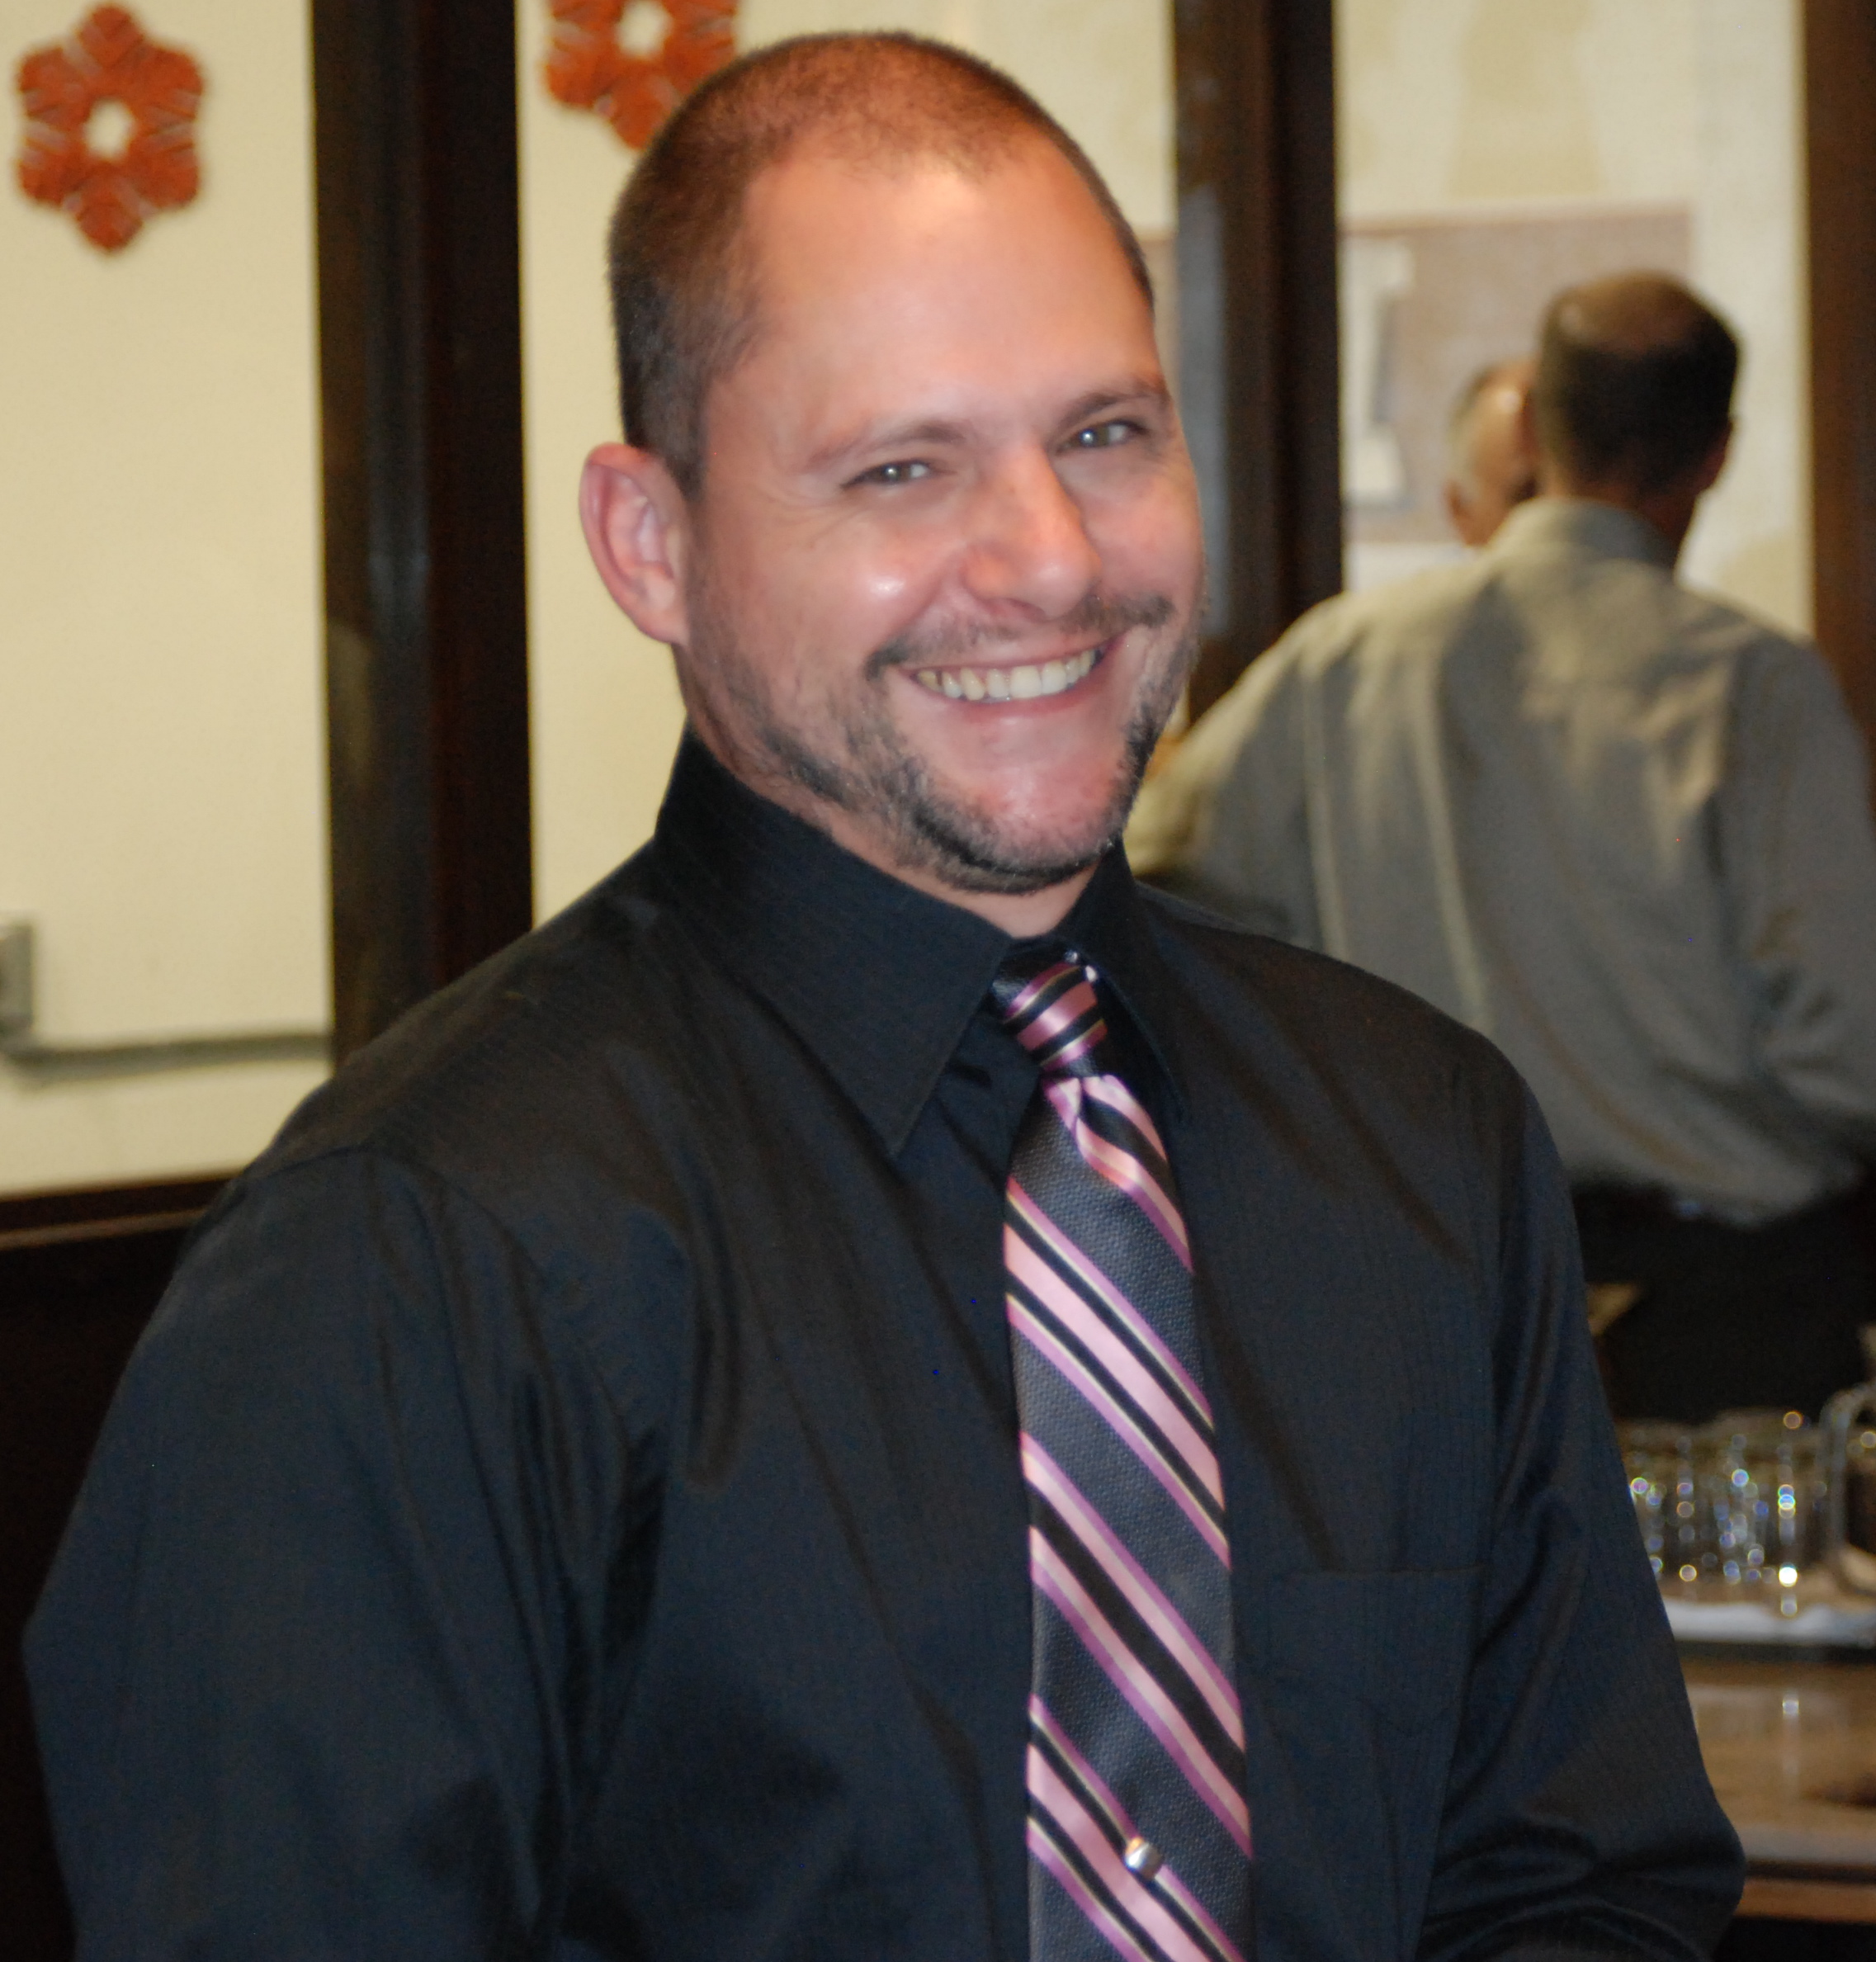 Frank Krhounek, SODO Cafe General Manager